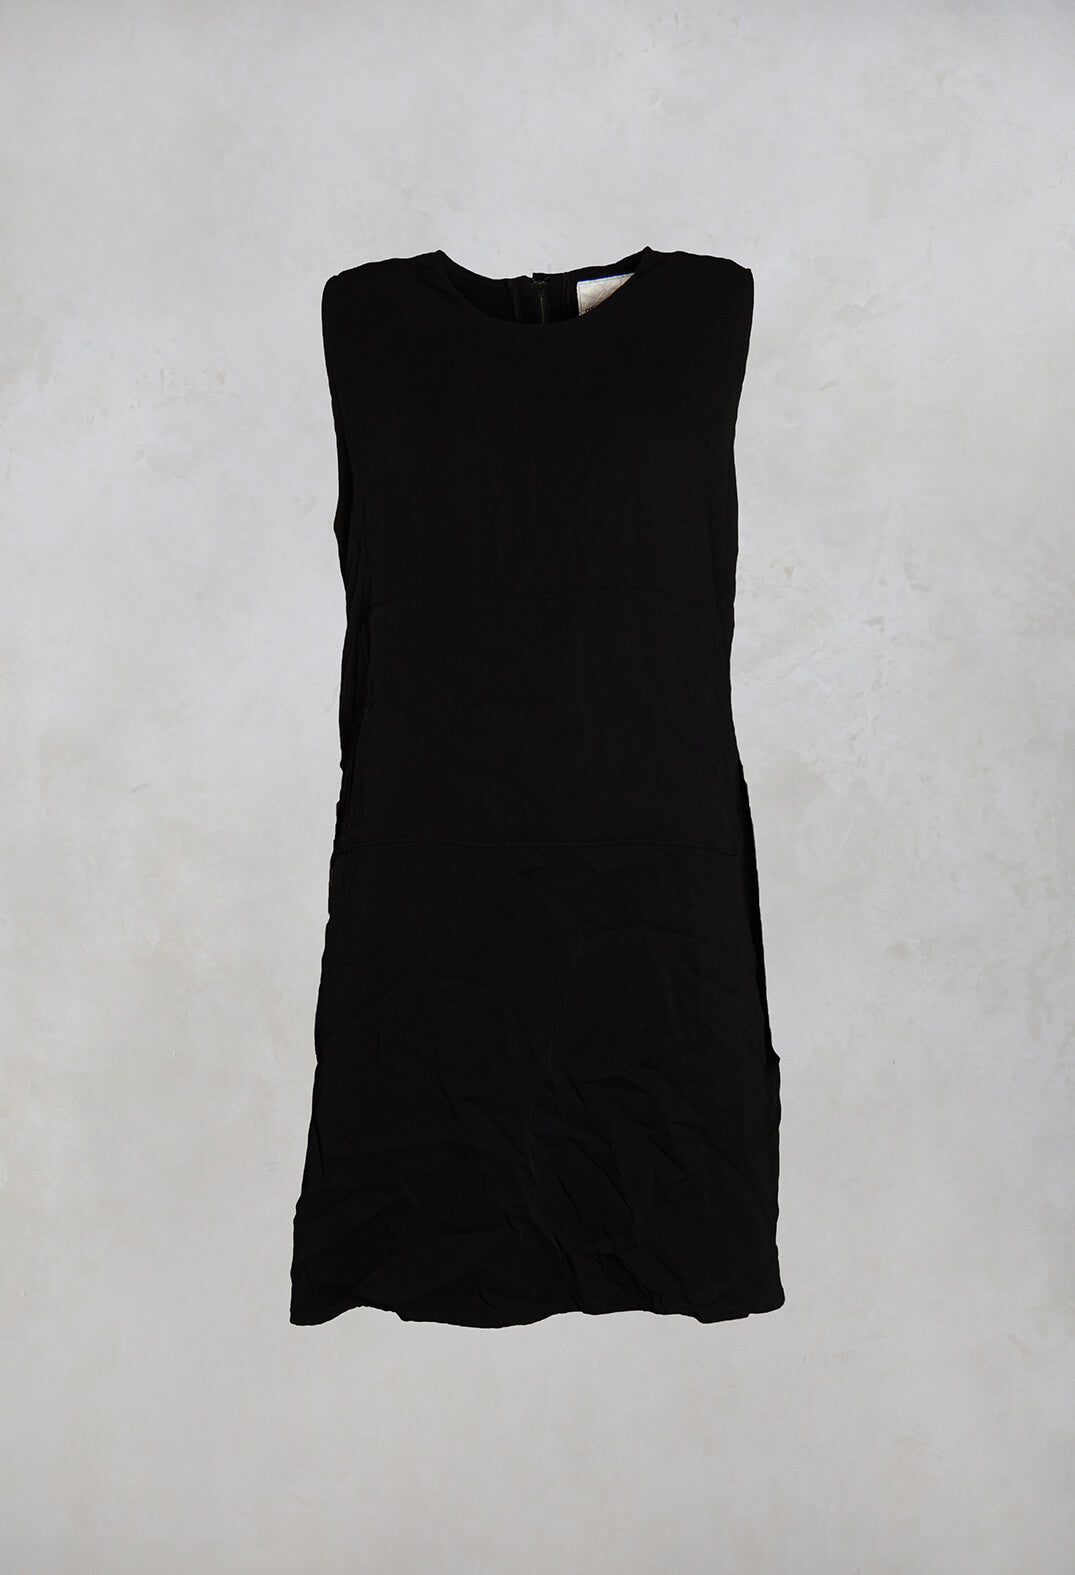 Ockero Sleeveless Dress in Black